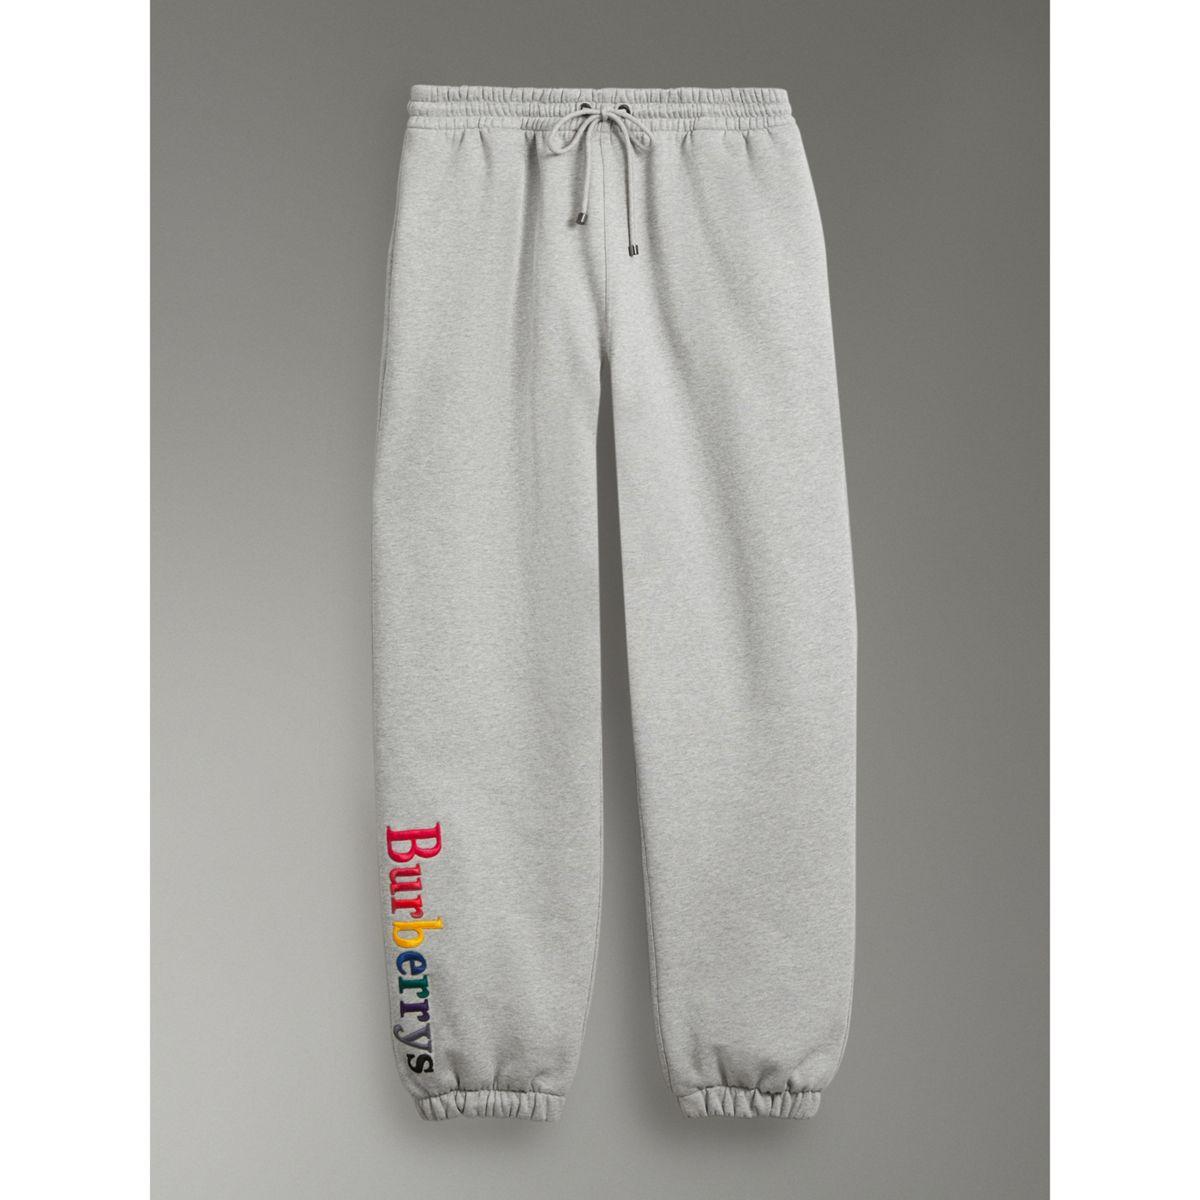 Burberry Cotton Rainbow Logo Sweatpants in Grey Melange for Men - Lyst